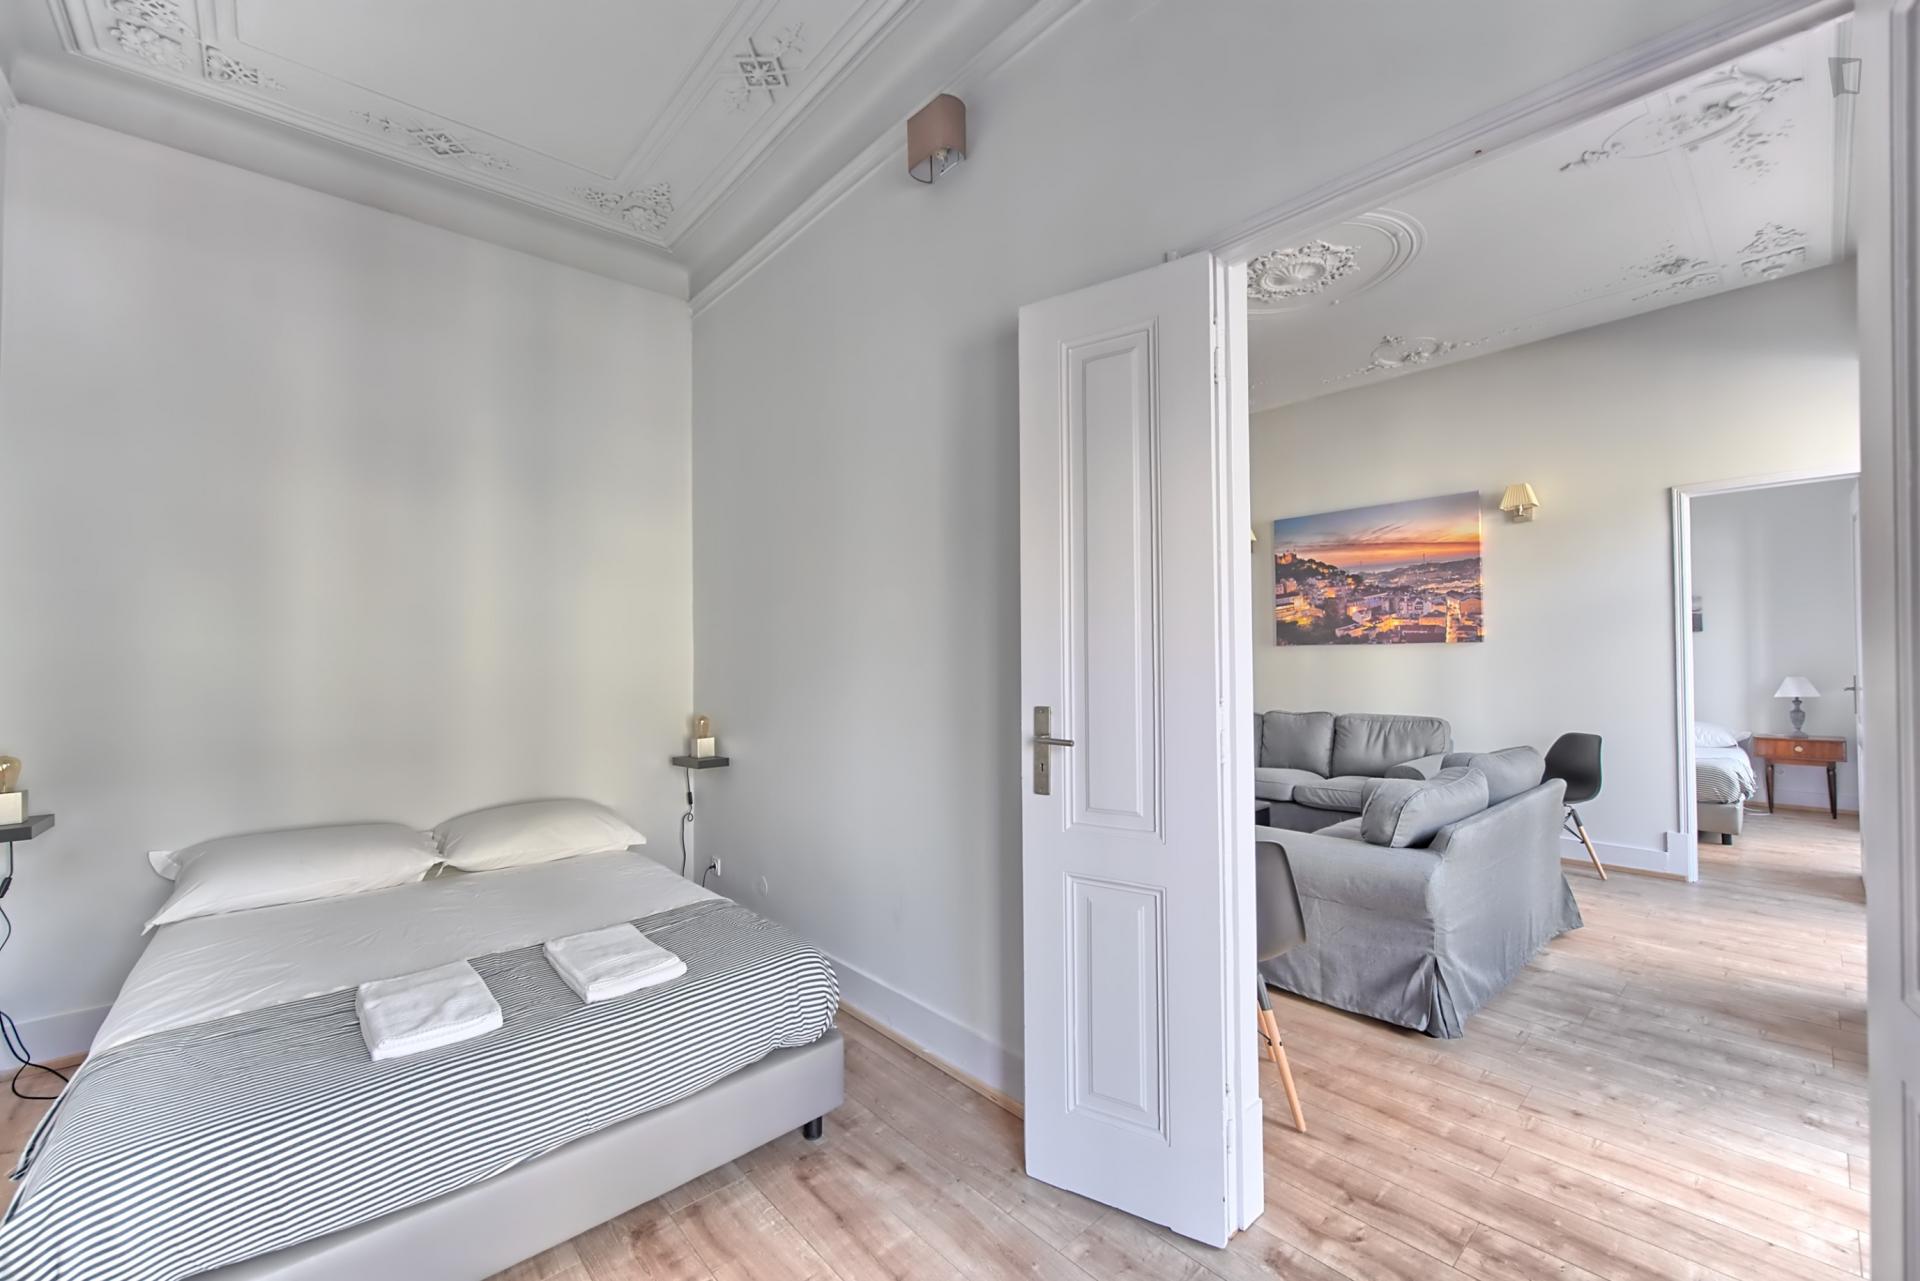 Almirante Reis 2- Spacious 6 Bedroom Apartment in Lisbon